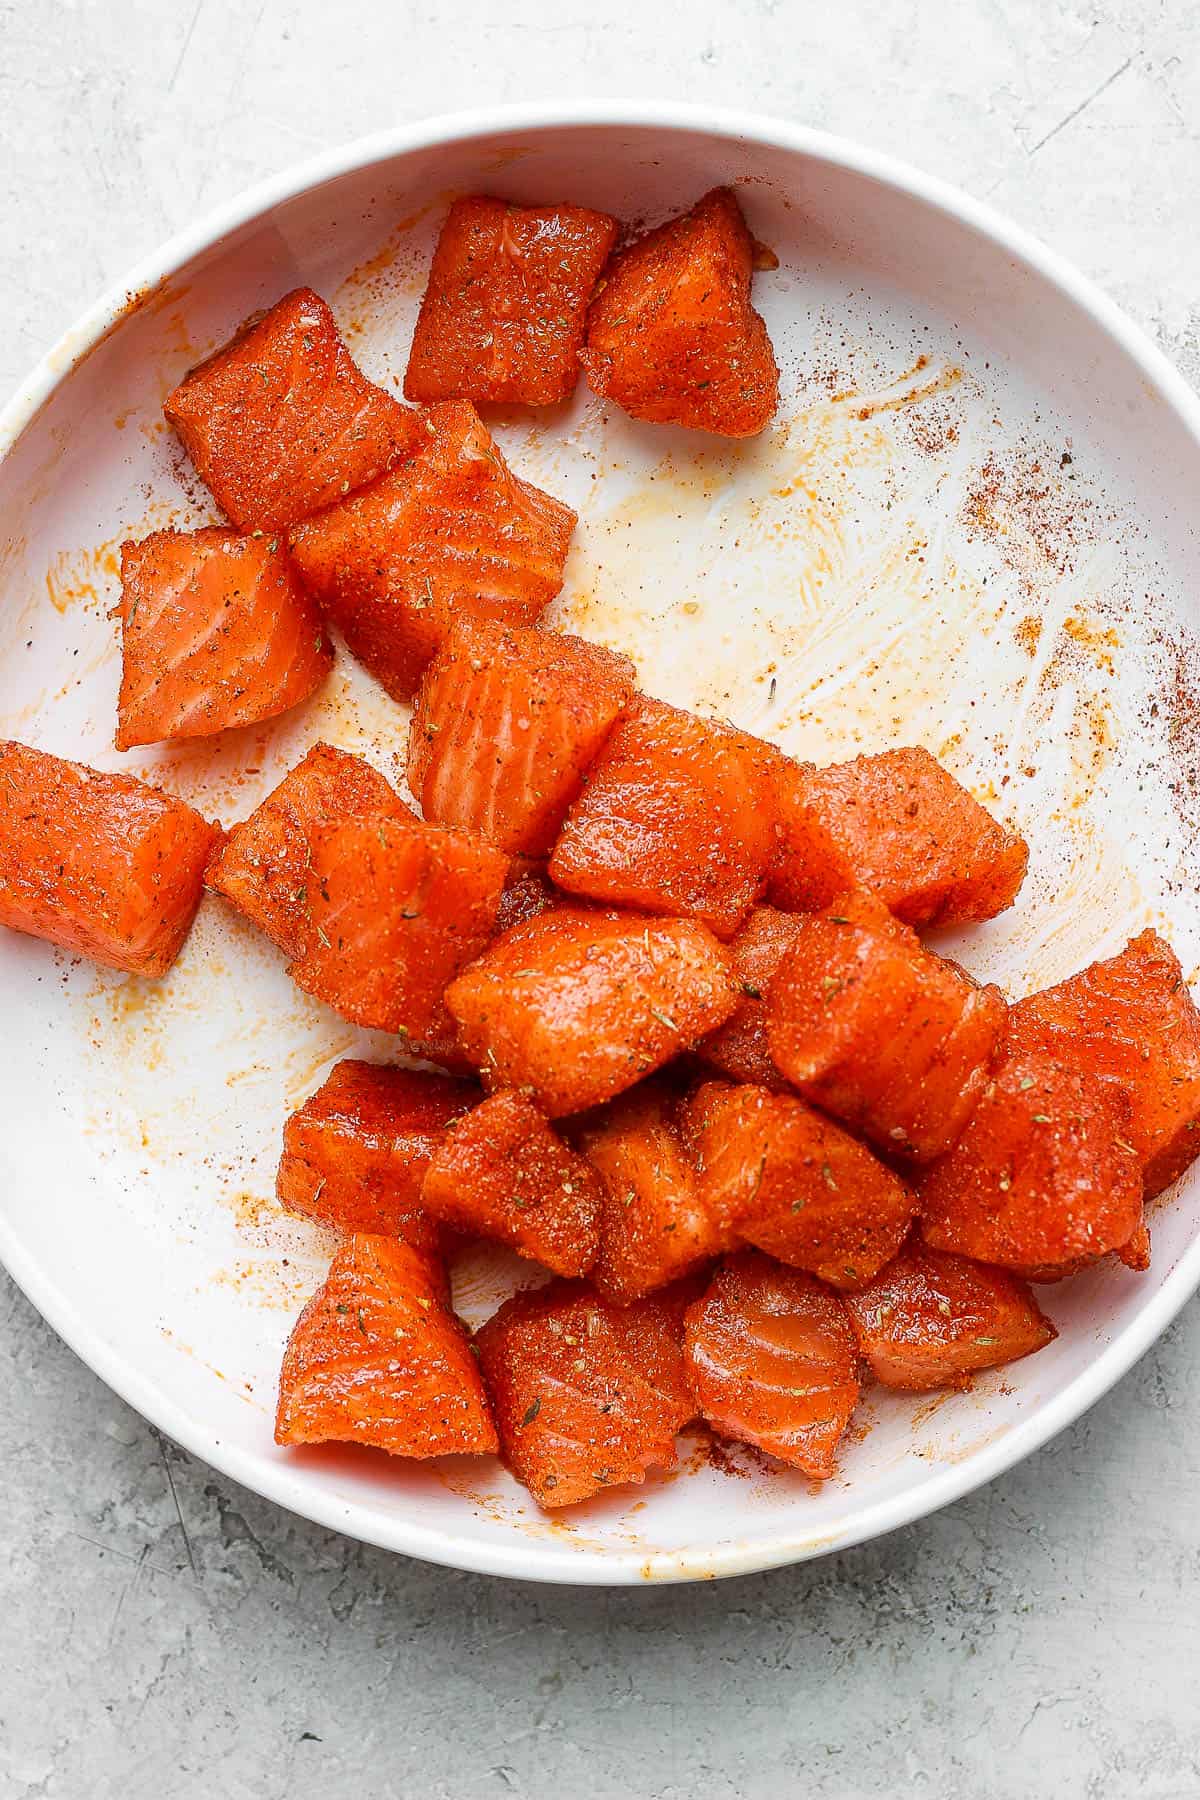 Raw salmon chunks in a bowl with blackened seasoning.